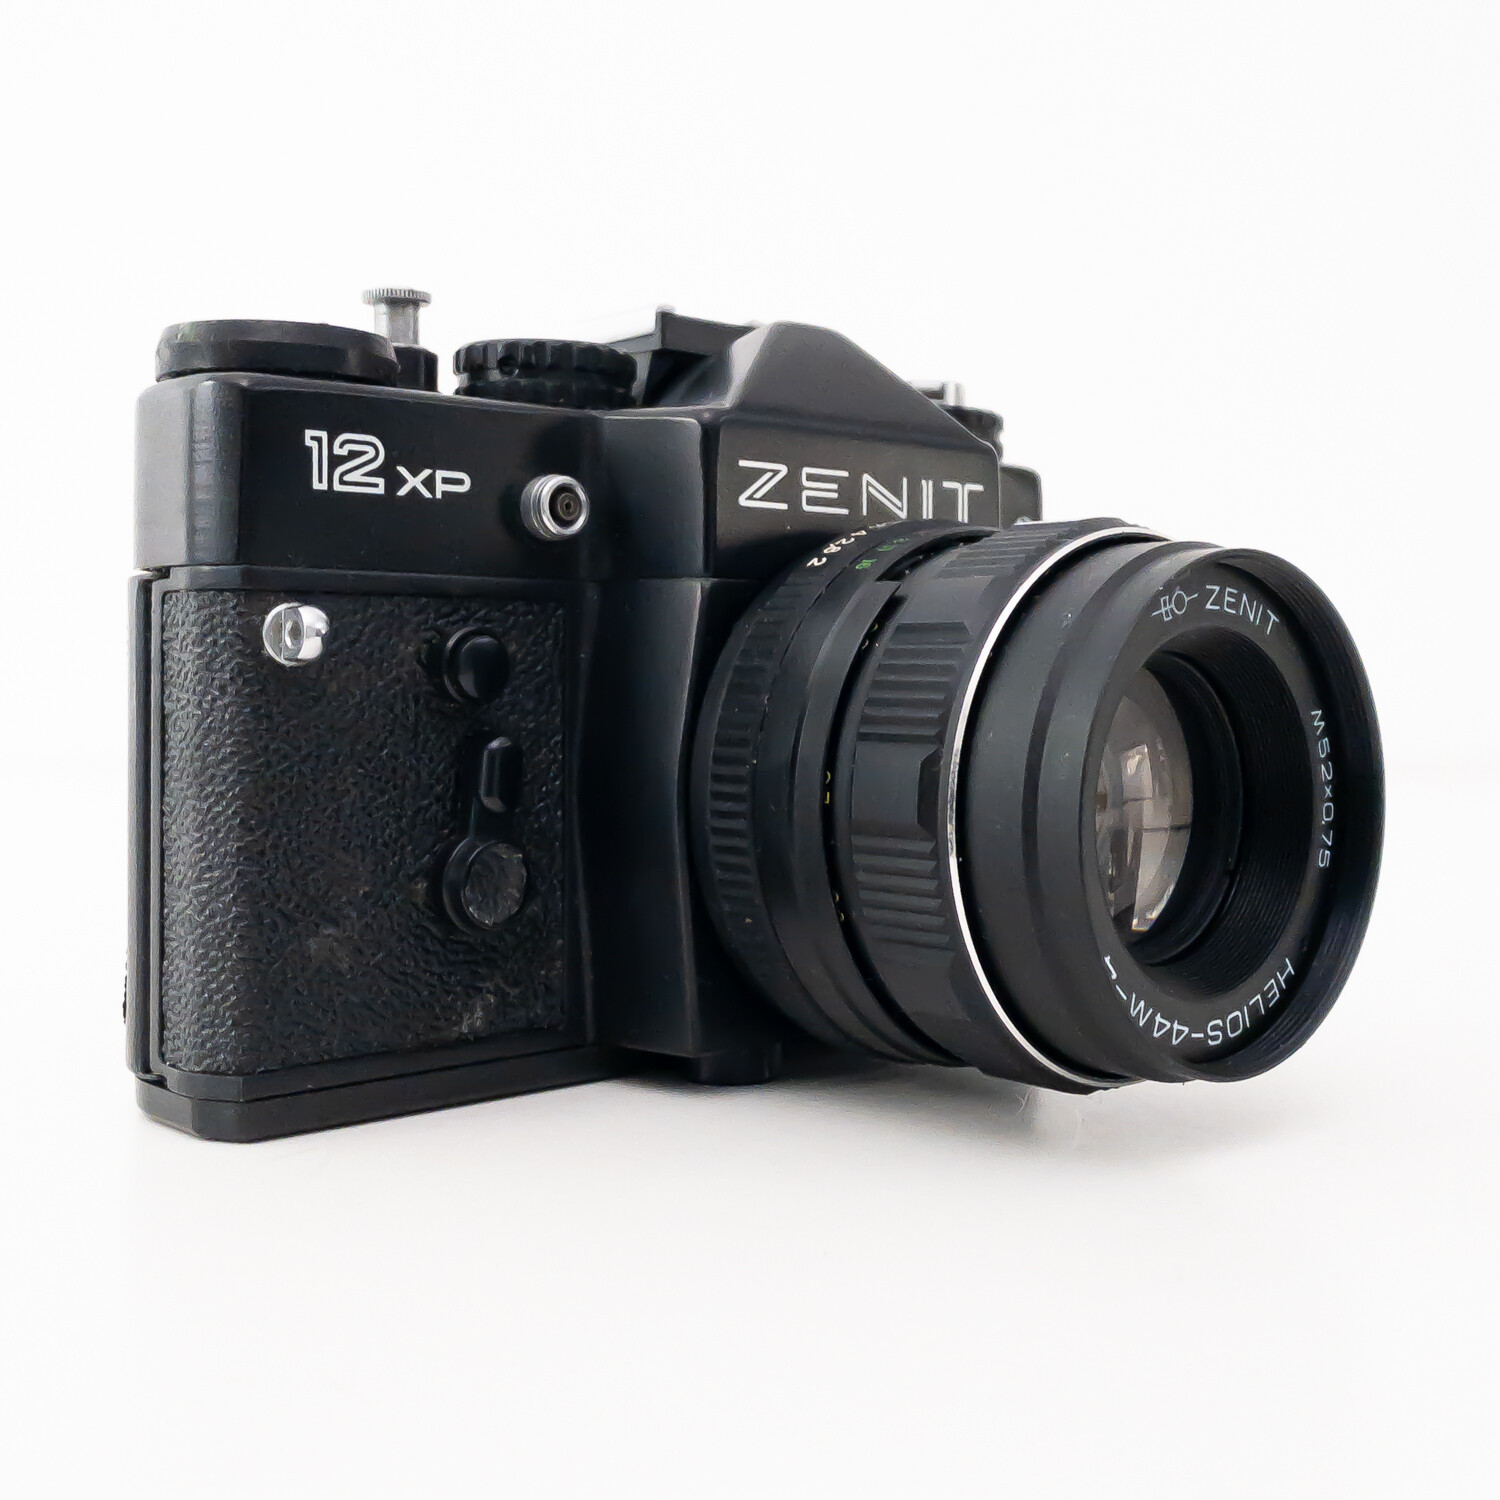 Zenit 12 XP camera